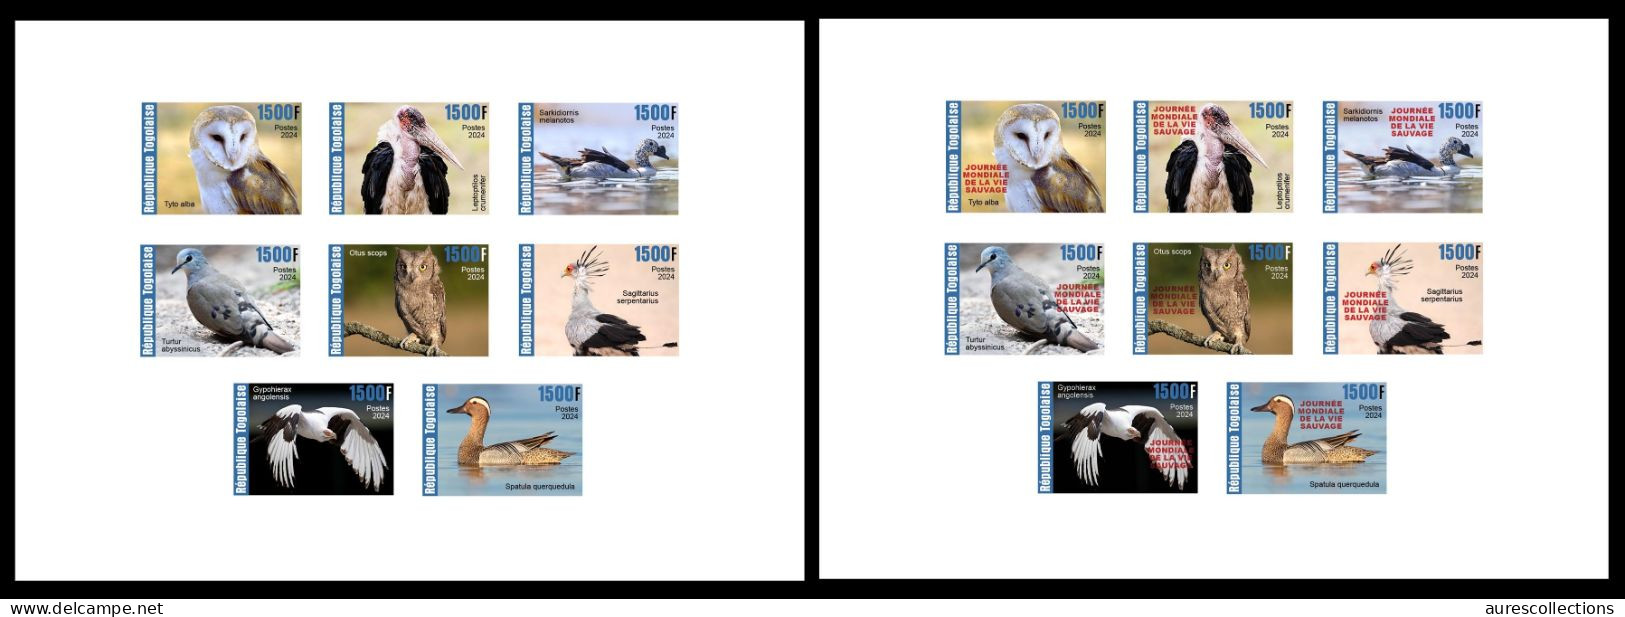 TOGO 2024 SET 2 DELUXE PROOF - REG & OVERPRINT - BIRDS OISEAUX - DUCK DUCKS BARN OWL OWLS SECRETARY BIRD EAGLES DOVES - Hiboux & Chouettes